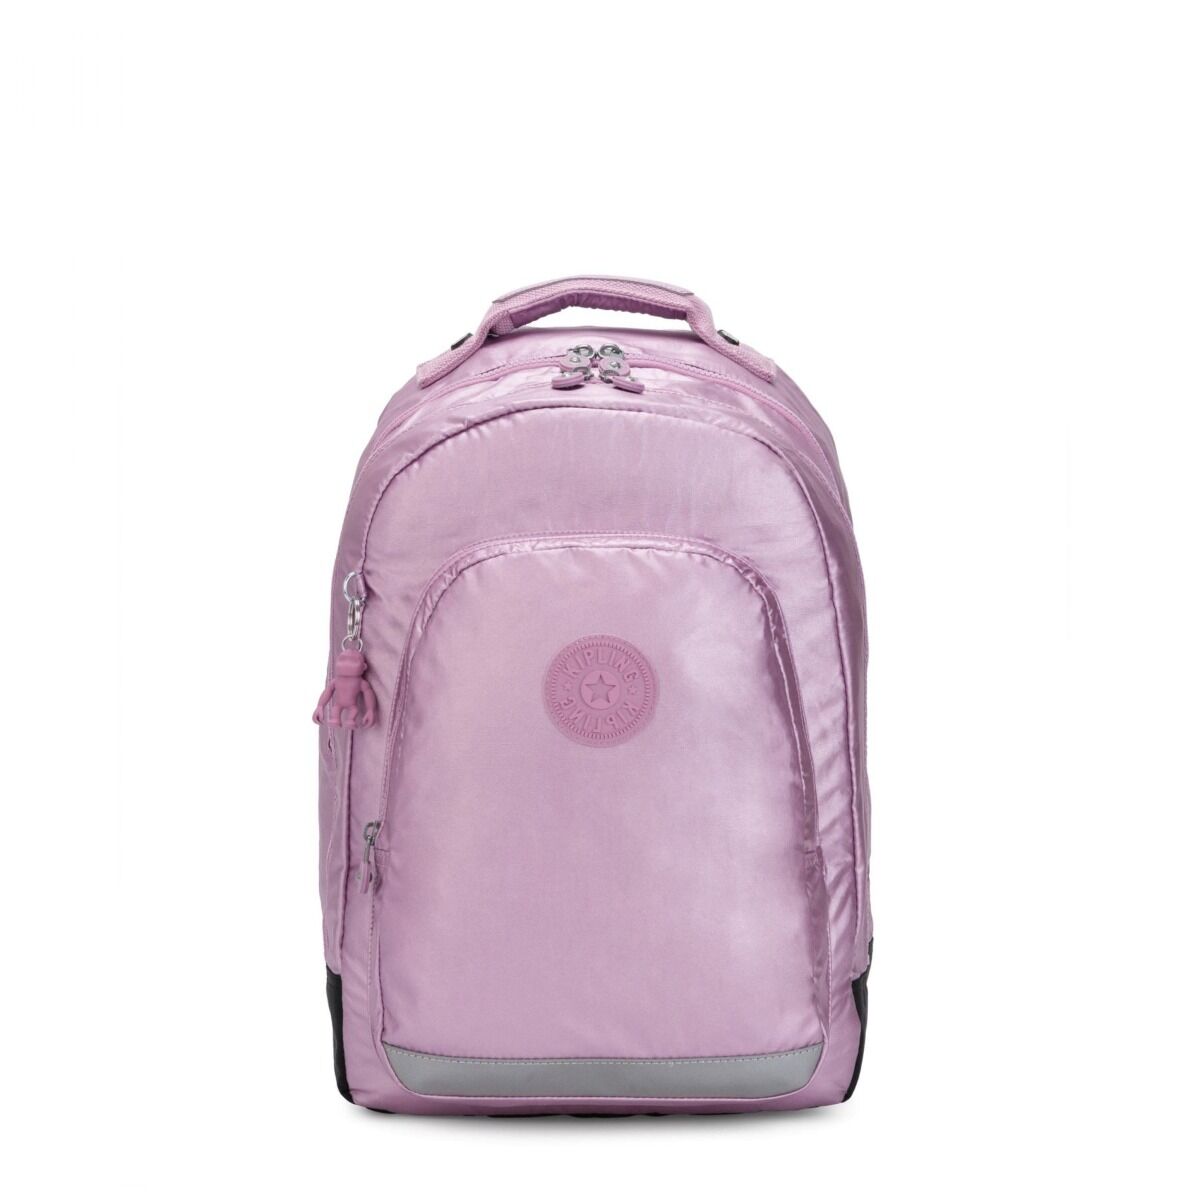 Kipling Class Room backpack-Metallic Berry